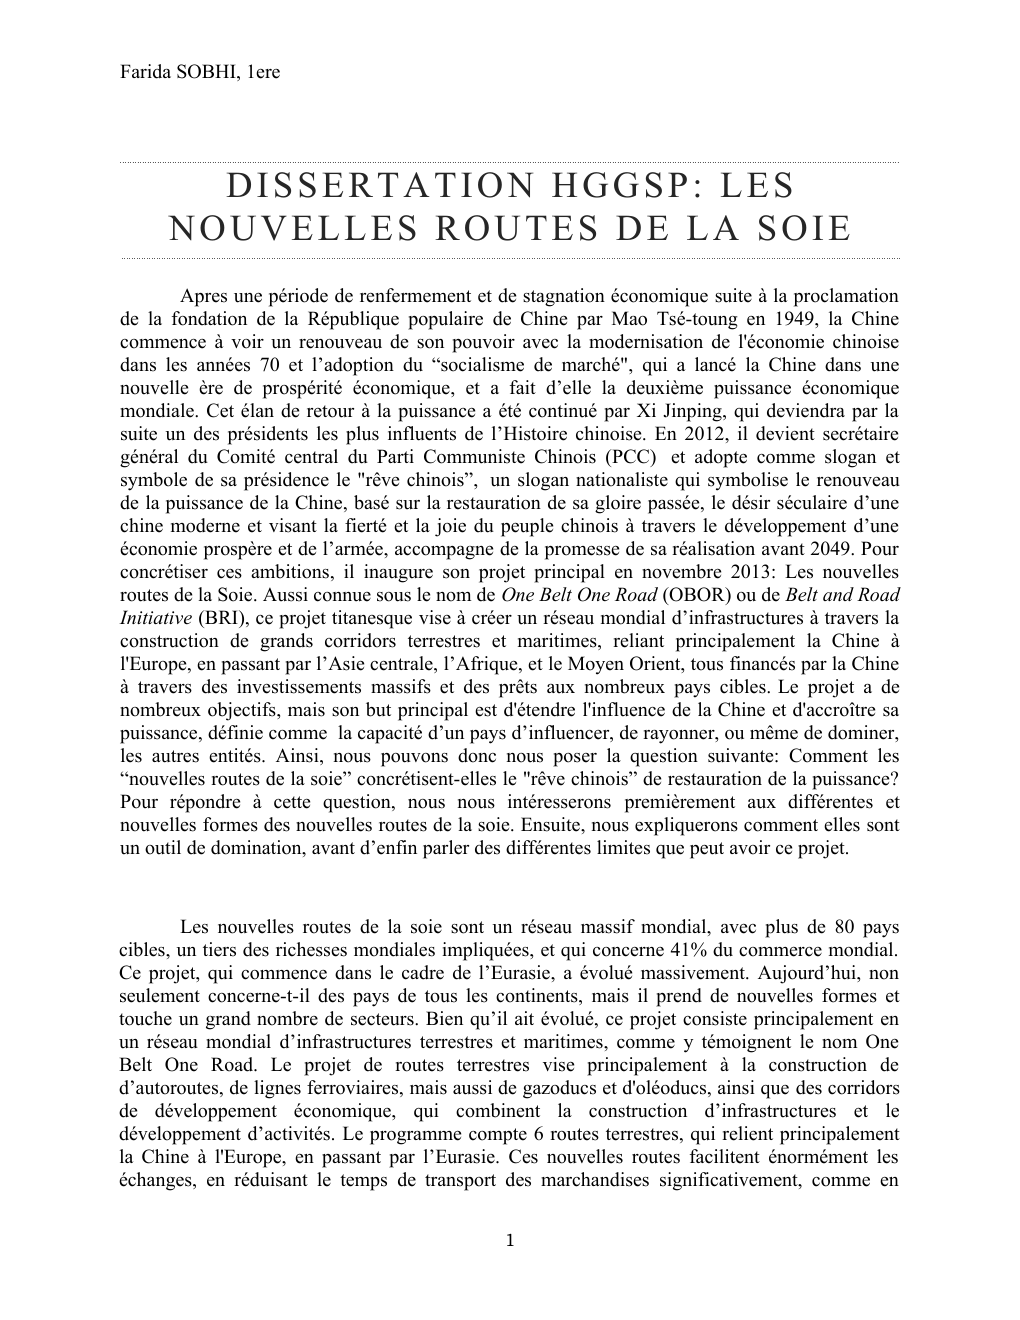 dissertation hggsp